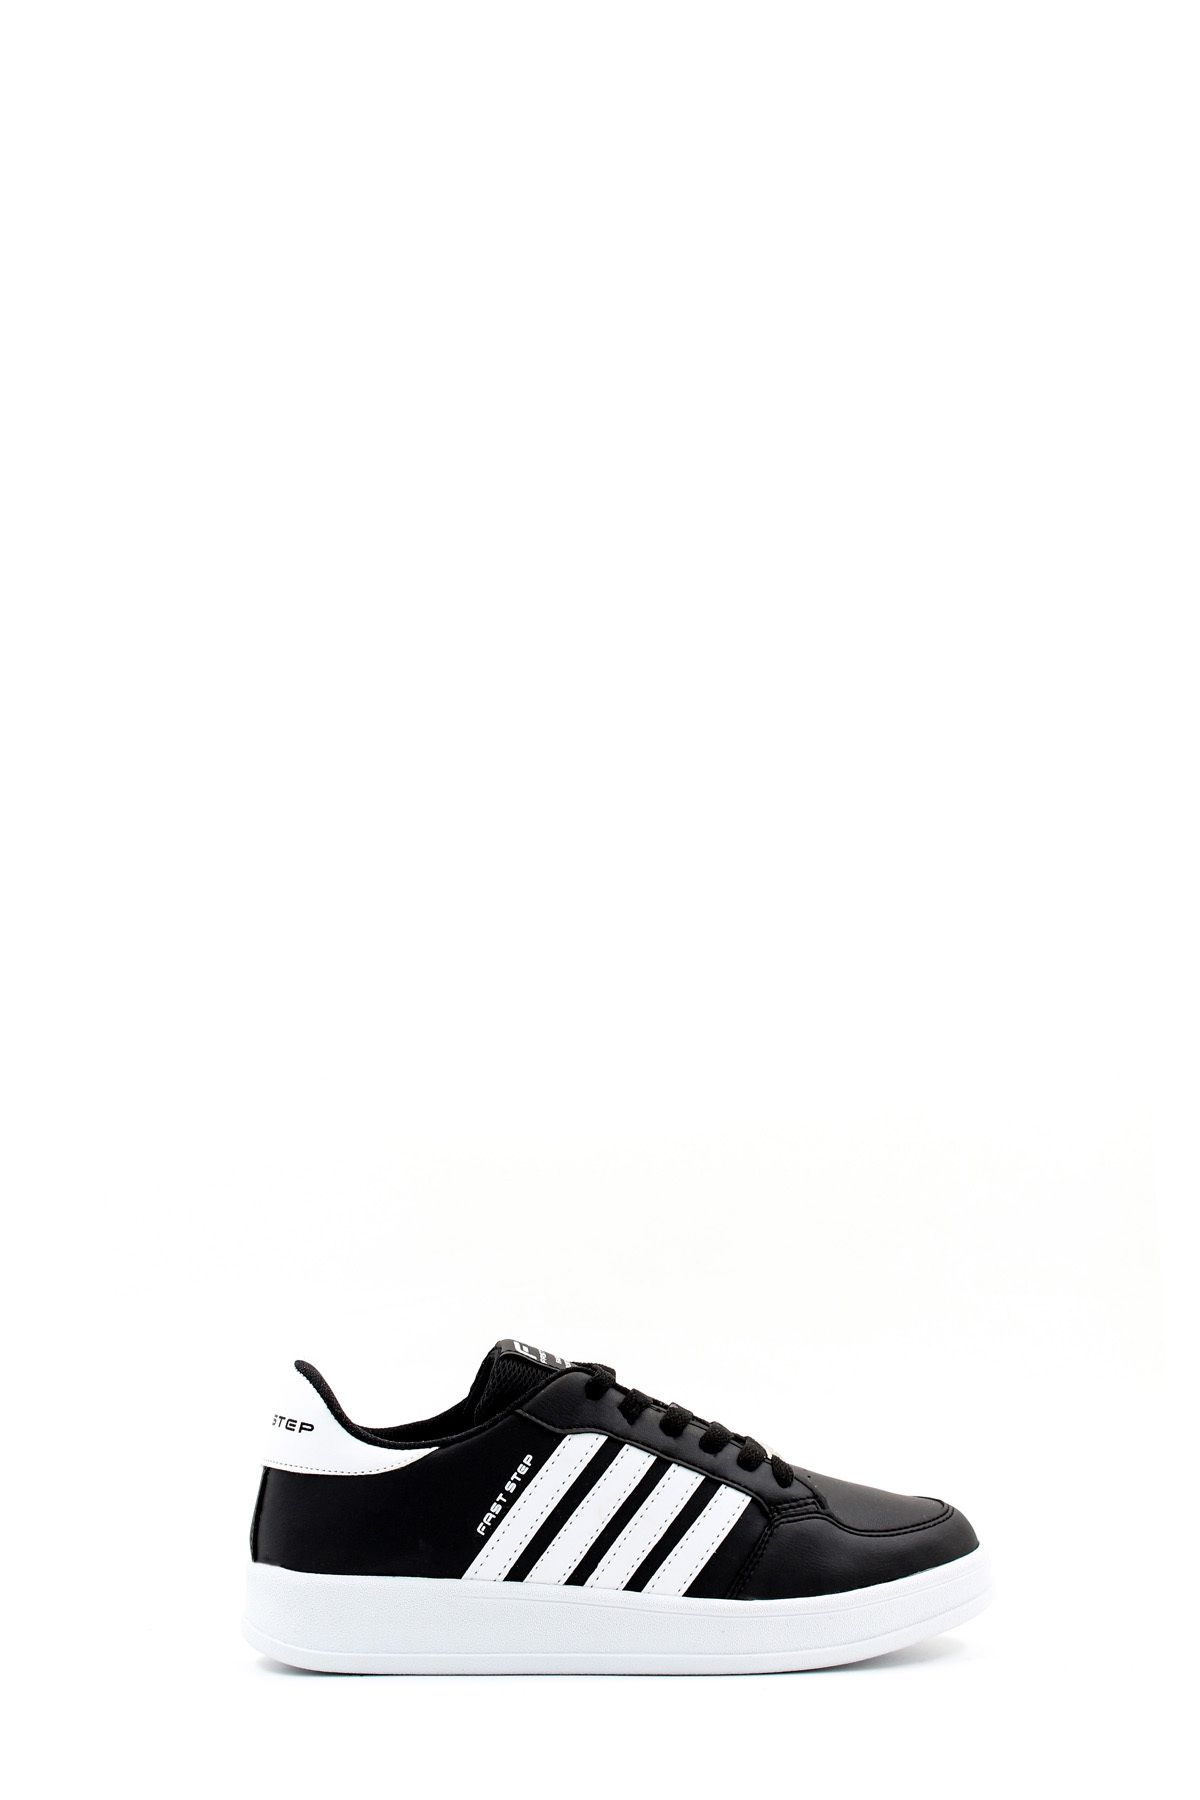 Fast Step Unisex Günlük Rahat Yürüyüş Sneaker Battal Boy Hafif Ayakkabı 930mba019